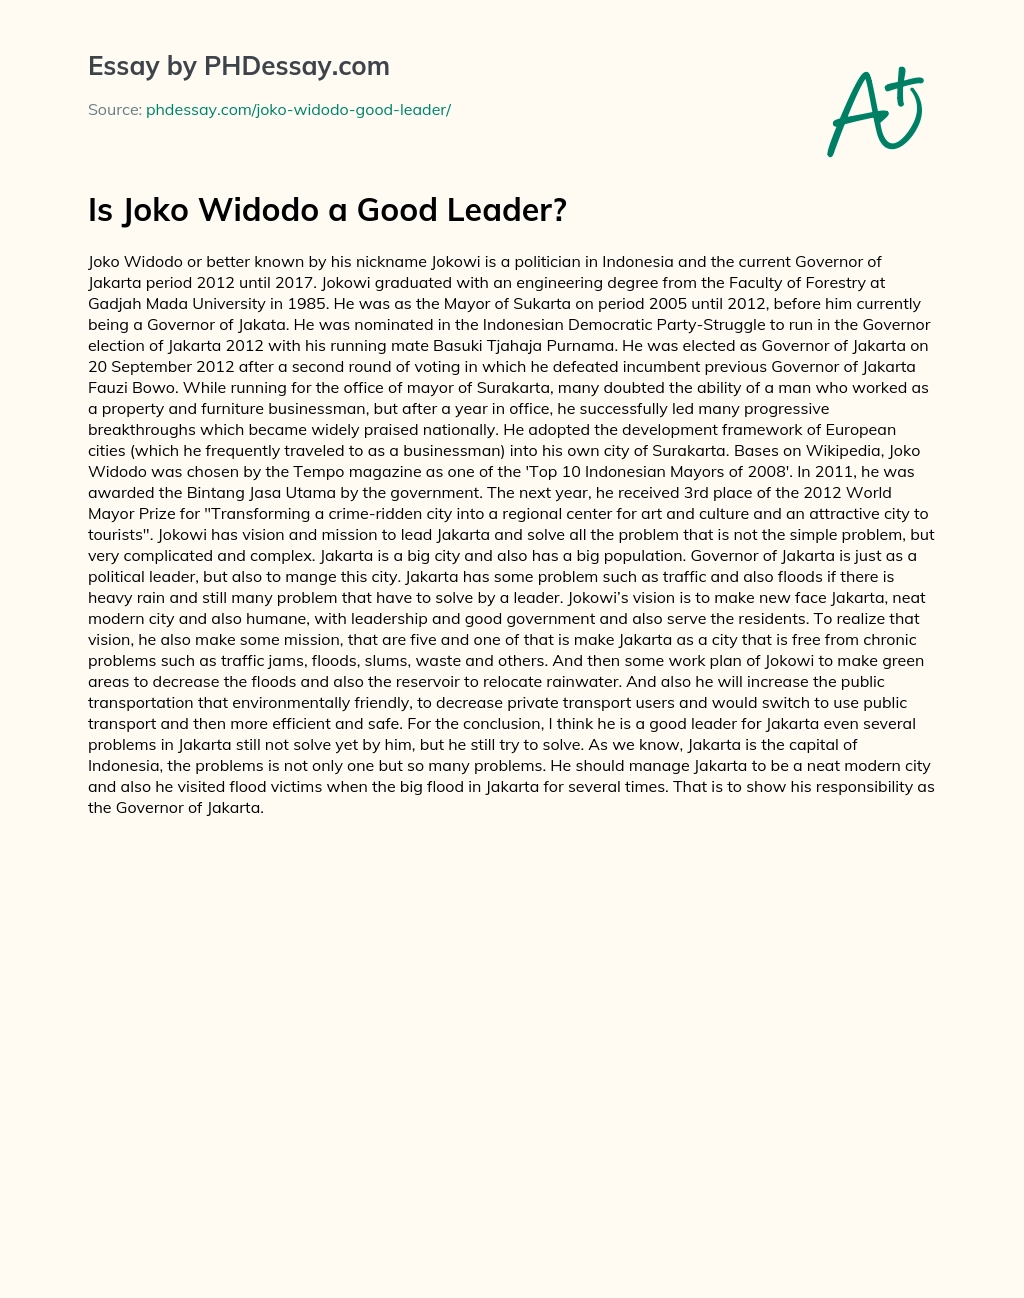 Is Joko Widodo a Good Leader? essay